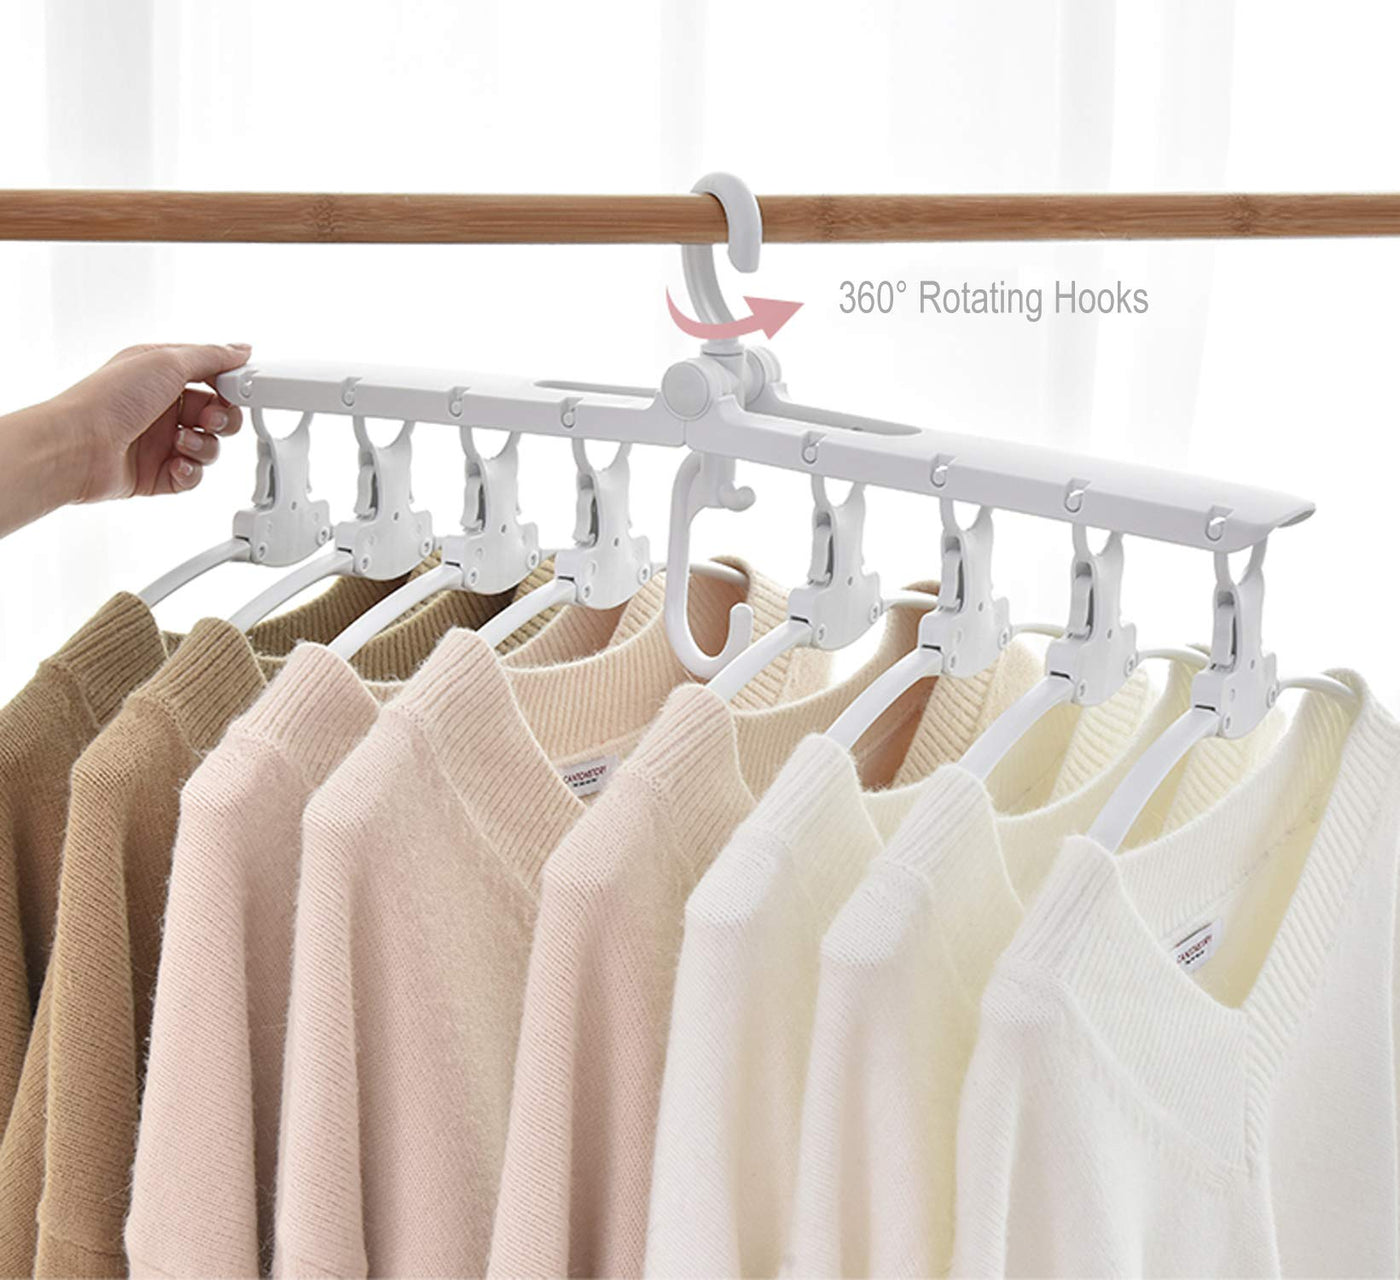 Multifunctional Clothes Hanger for Folding Nonslip Shirt Hangers Swivel 360 Hooks Clothing Hangers Space Saving Dress Hangers (Multicolor)